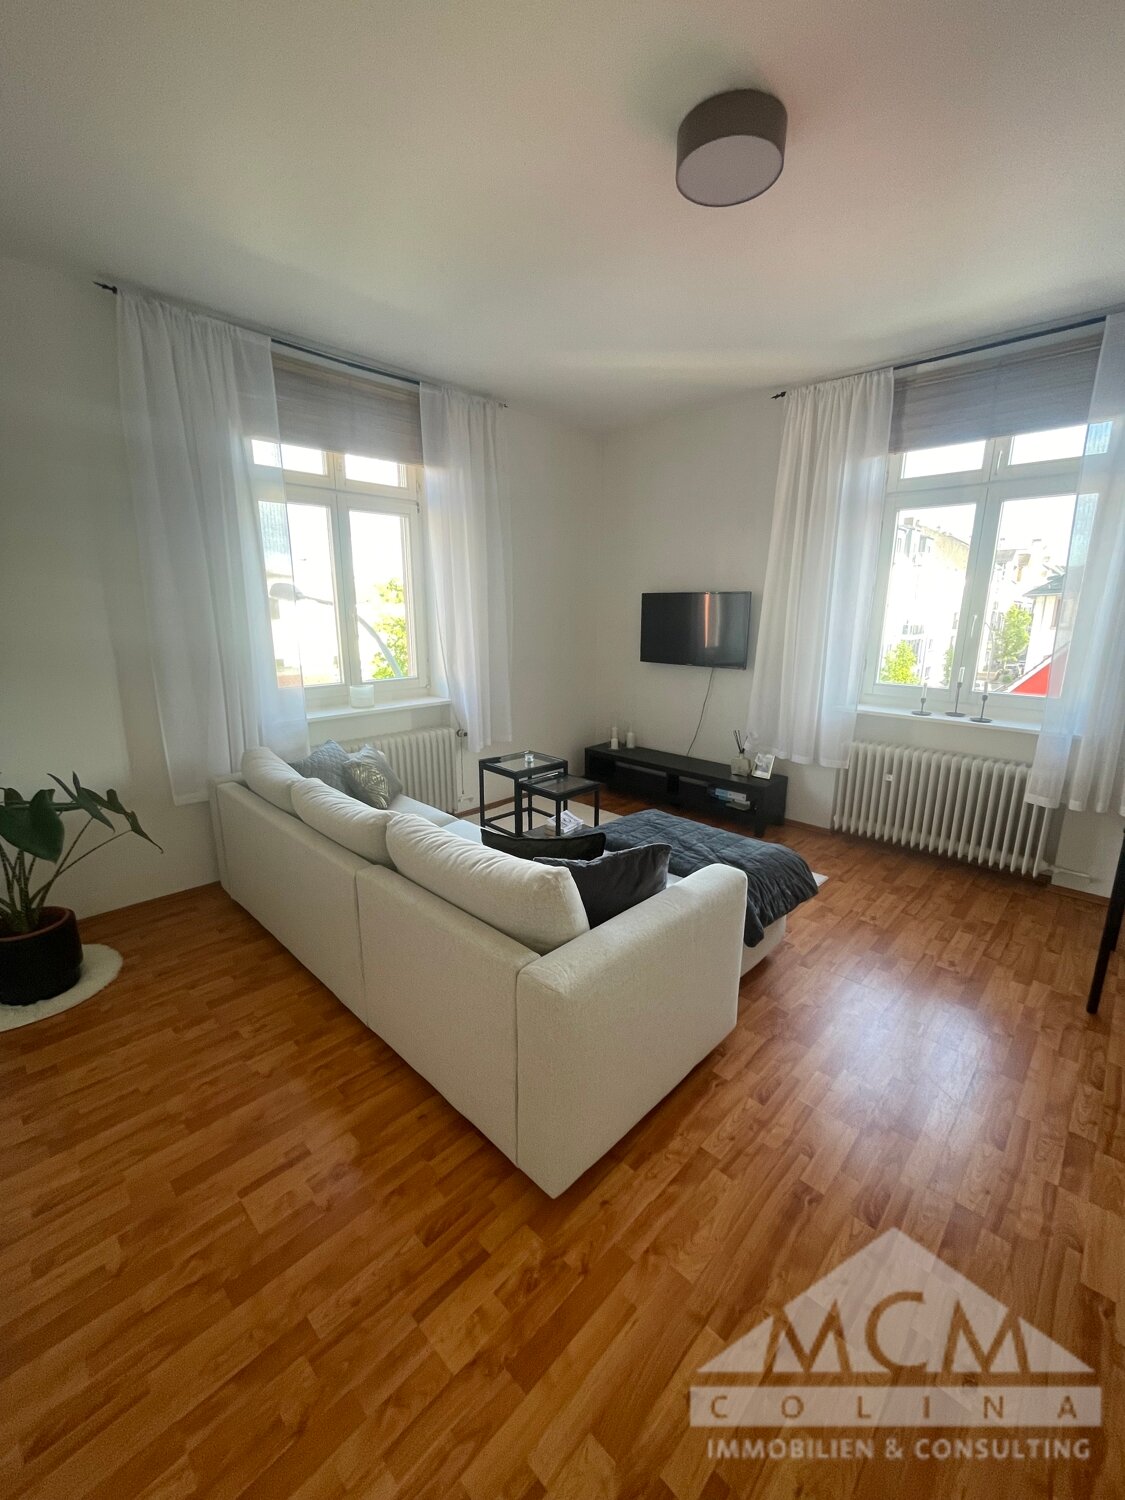 Wohnung zur Miete 990 € 2 Zimmer 55 m² 2. Geschoss Niederrad Frankfurt am Main 60528